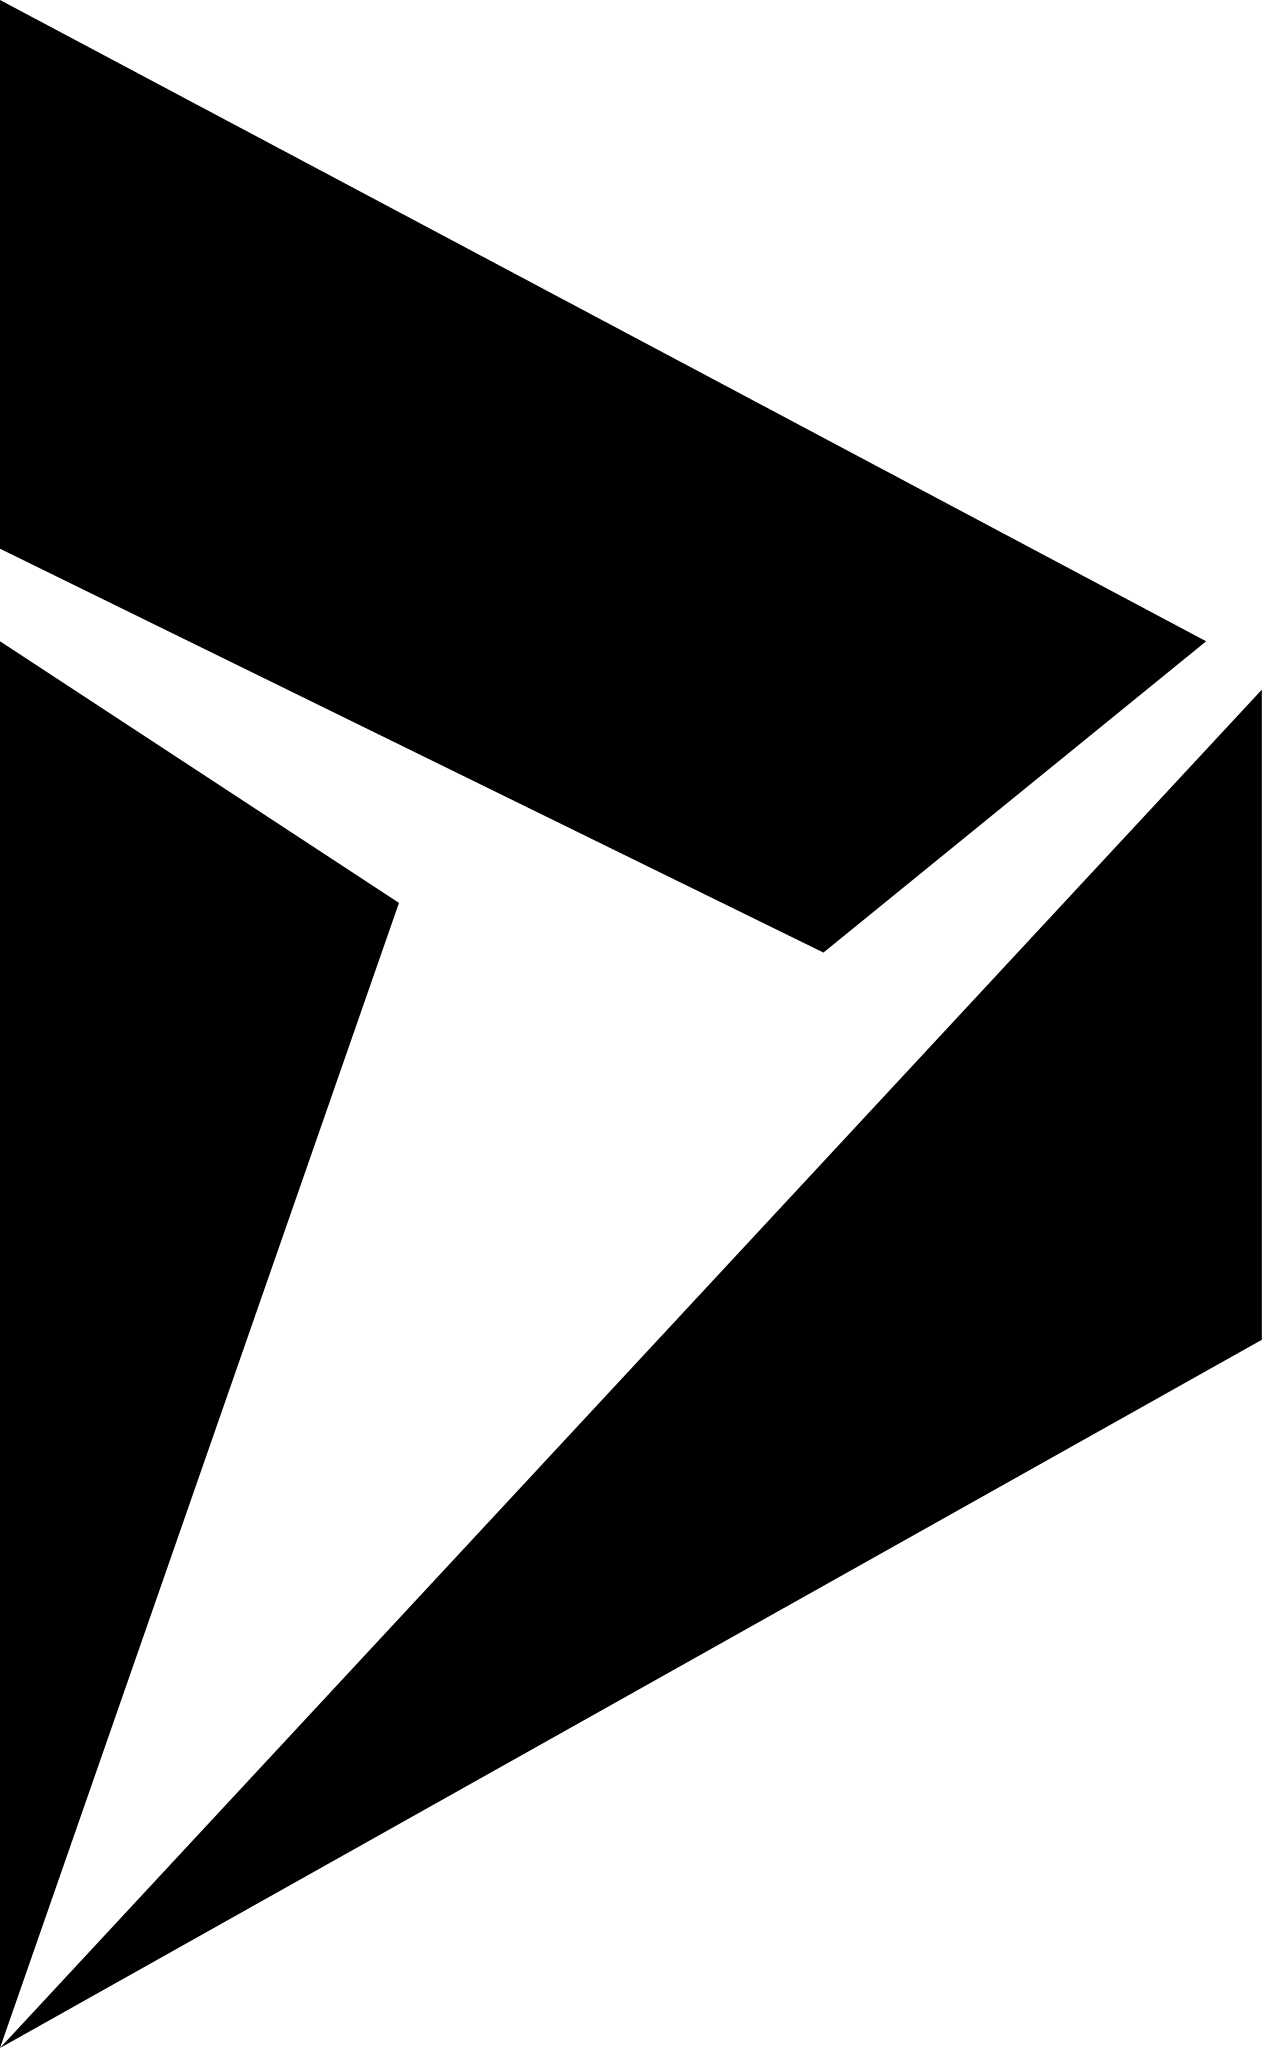 File:Windows 11 logo.svg - Wikipedia